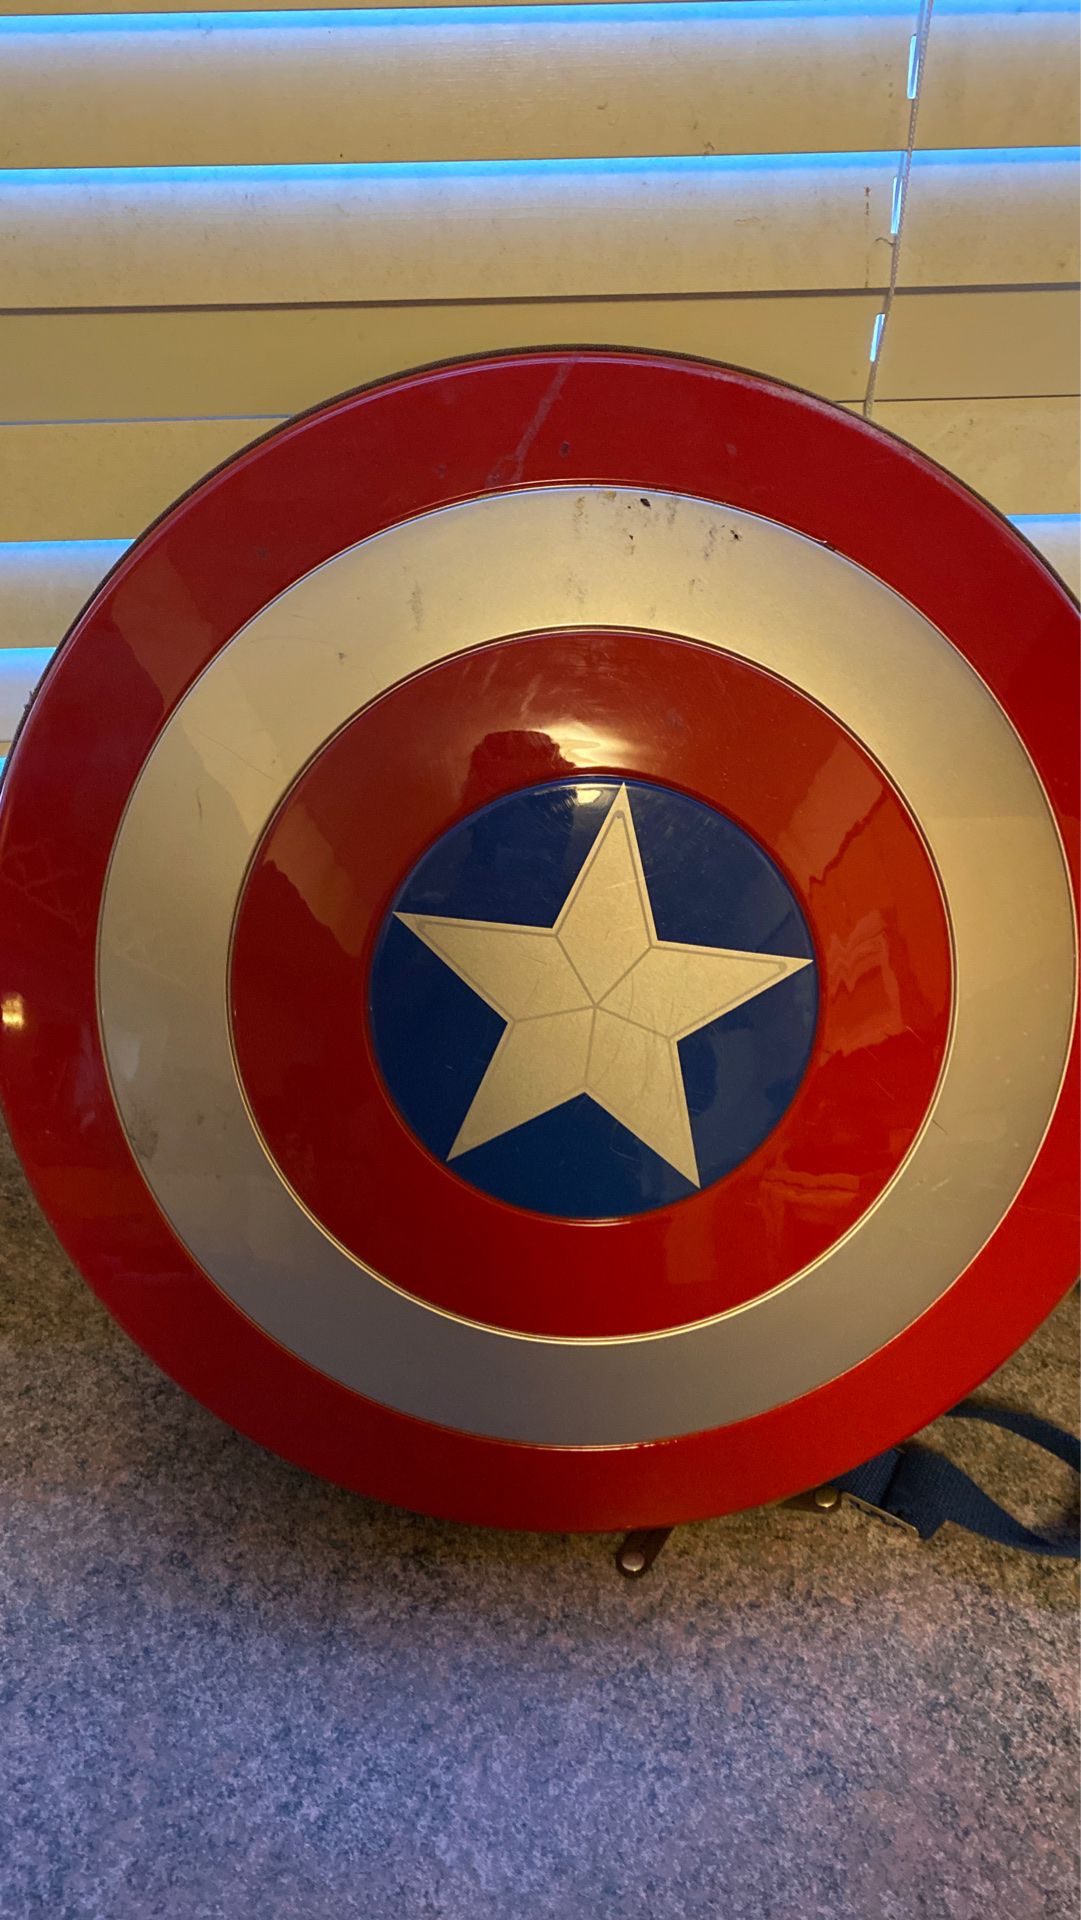 Captain America Shield Backpack